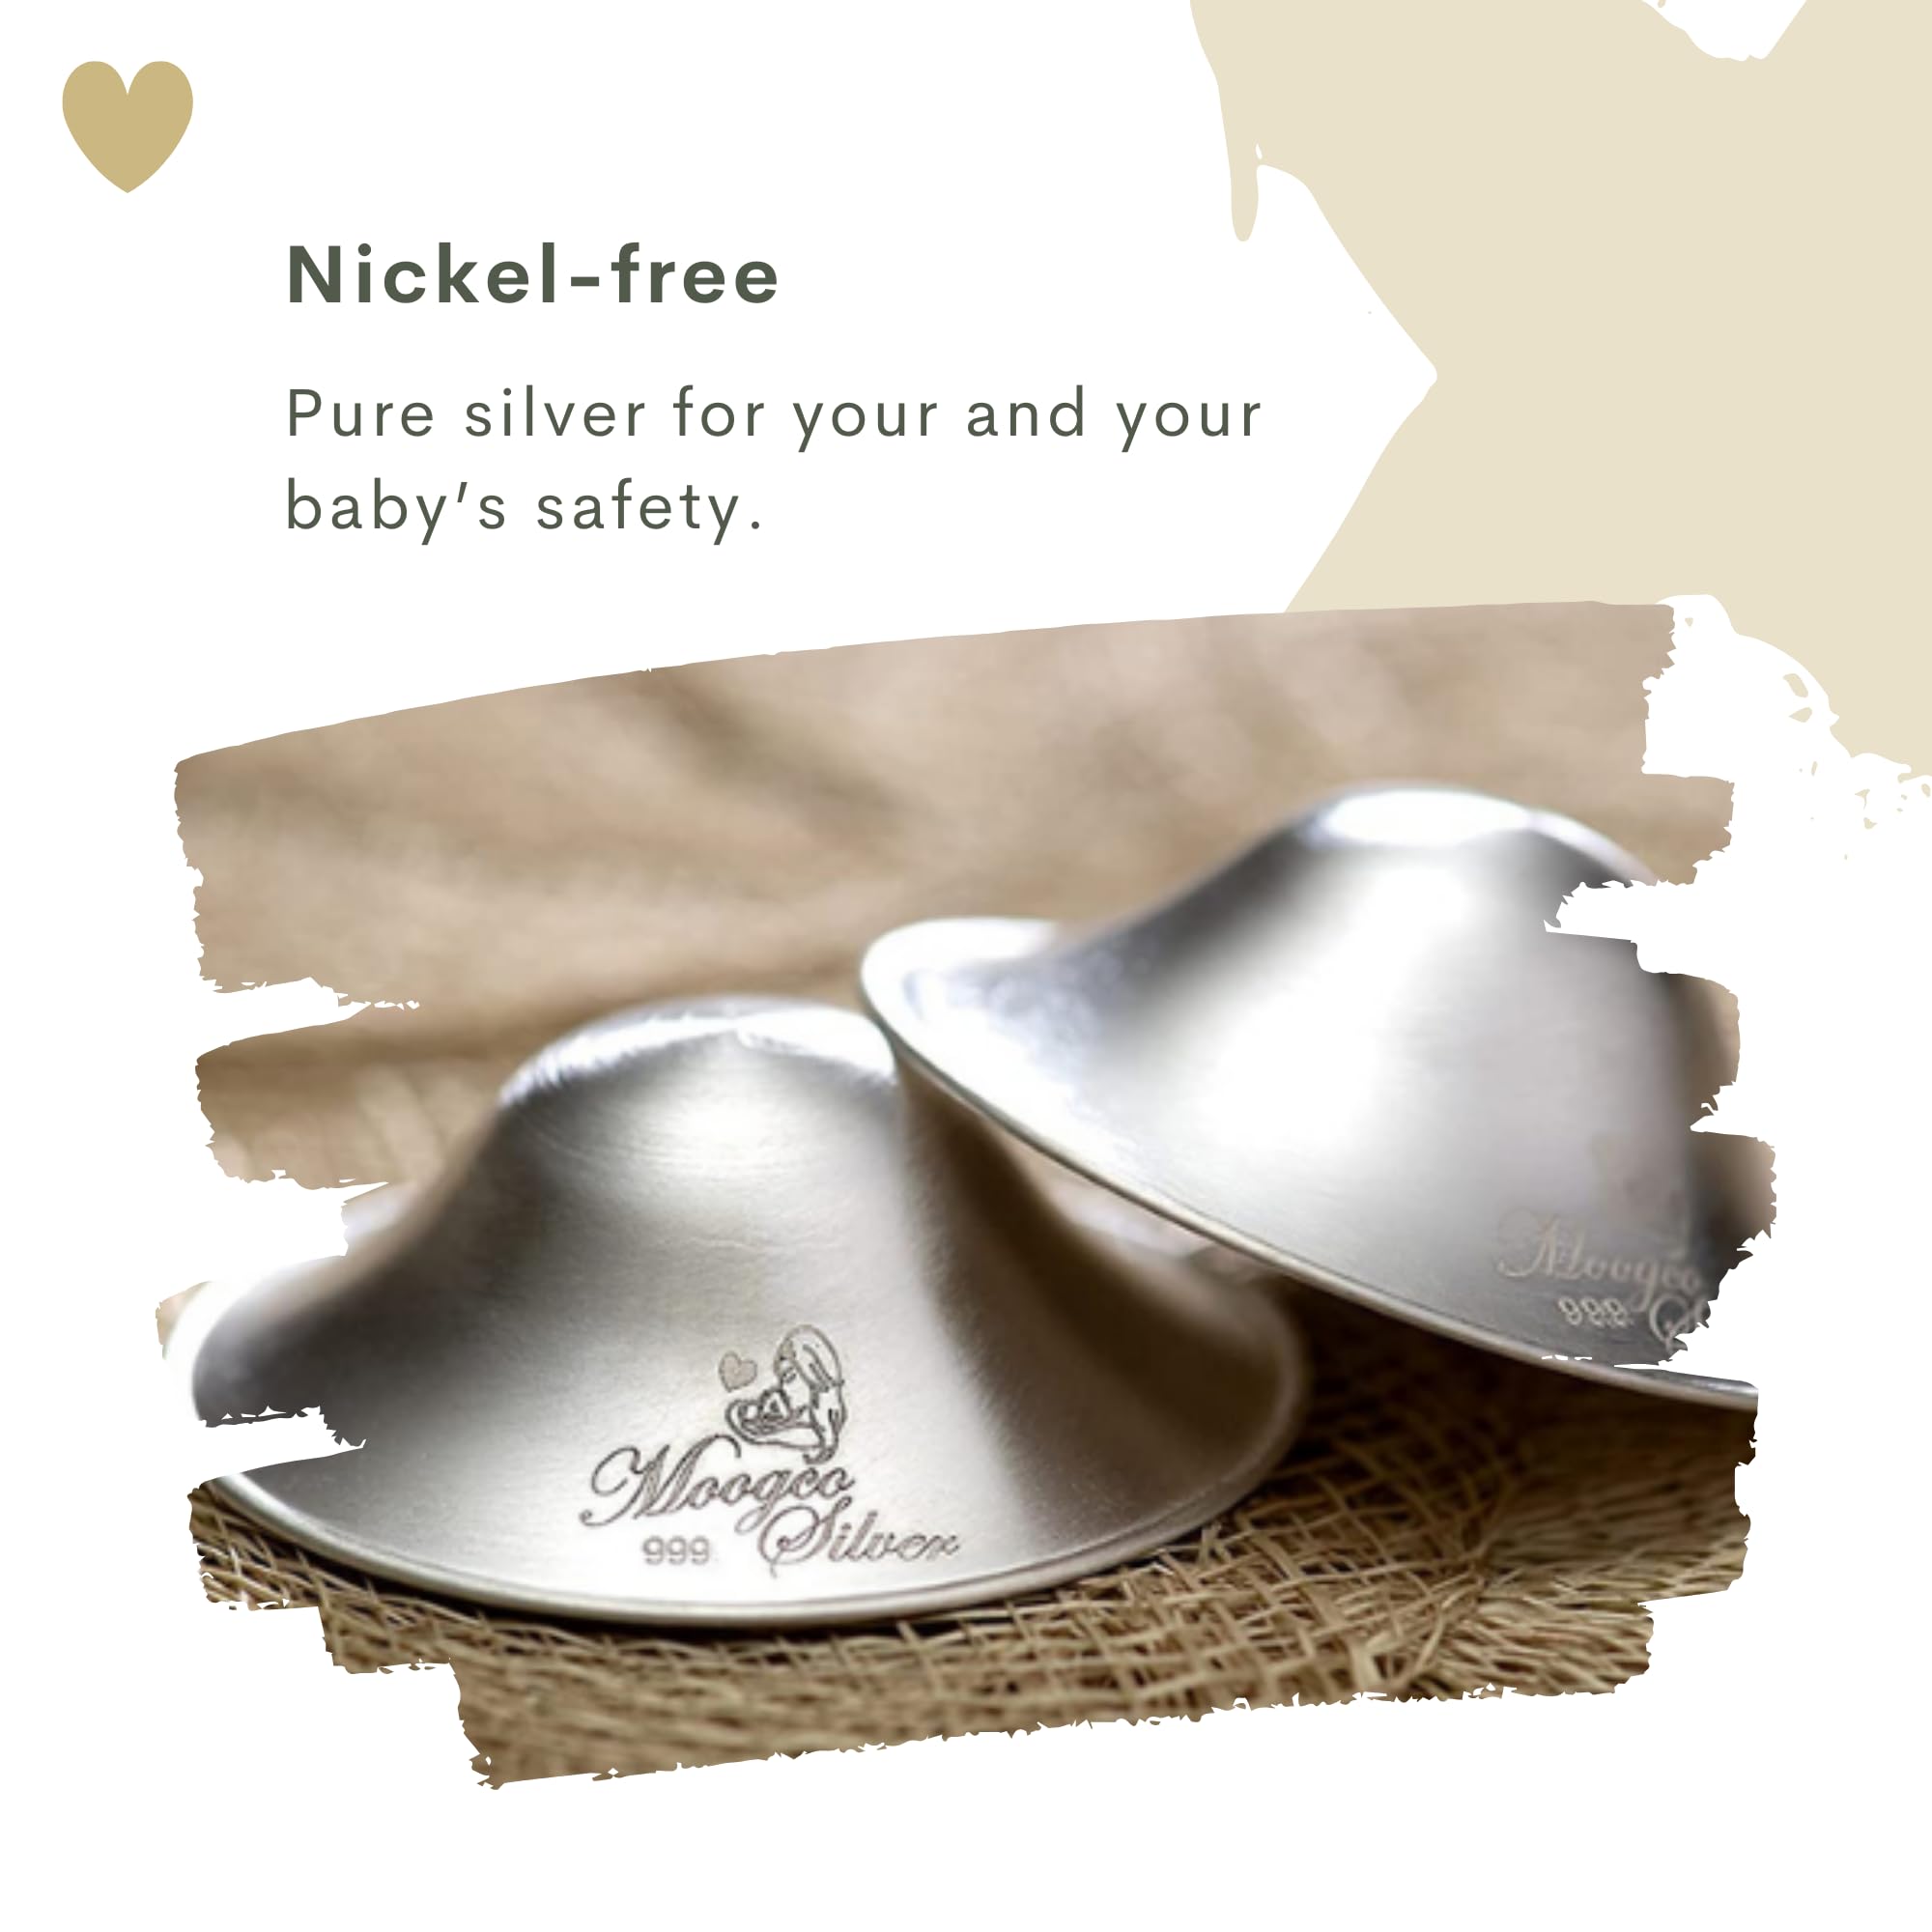 The Original Silver Nursing Cups - 999k Silver Cups - Nipple Shields for Nursing Newborn - Newborn Essentials Must Haves - Nipple Covers Breastfeeding - 999 Silver